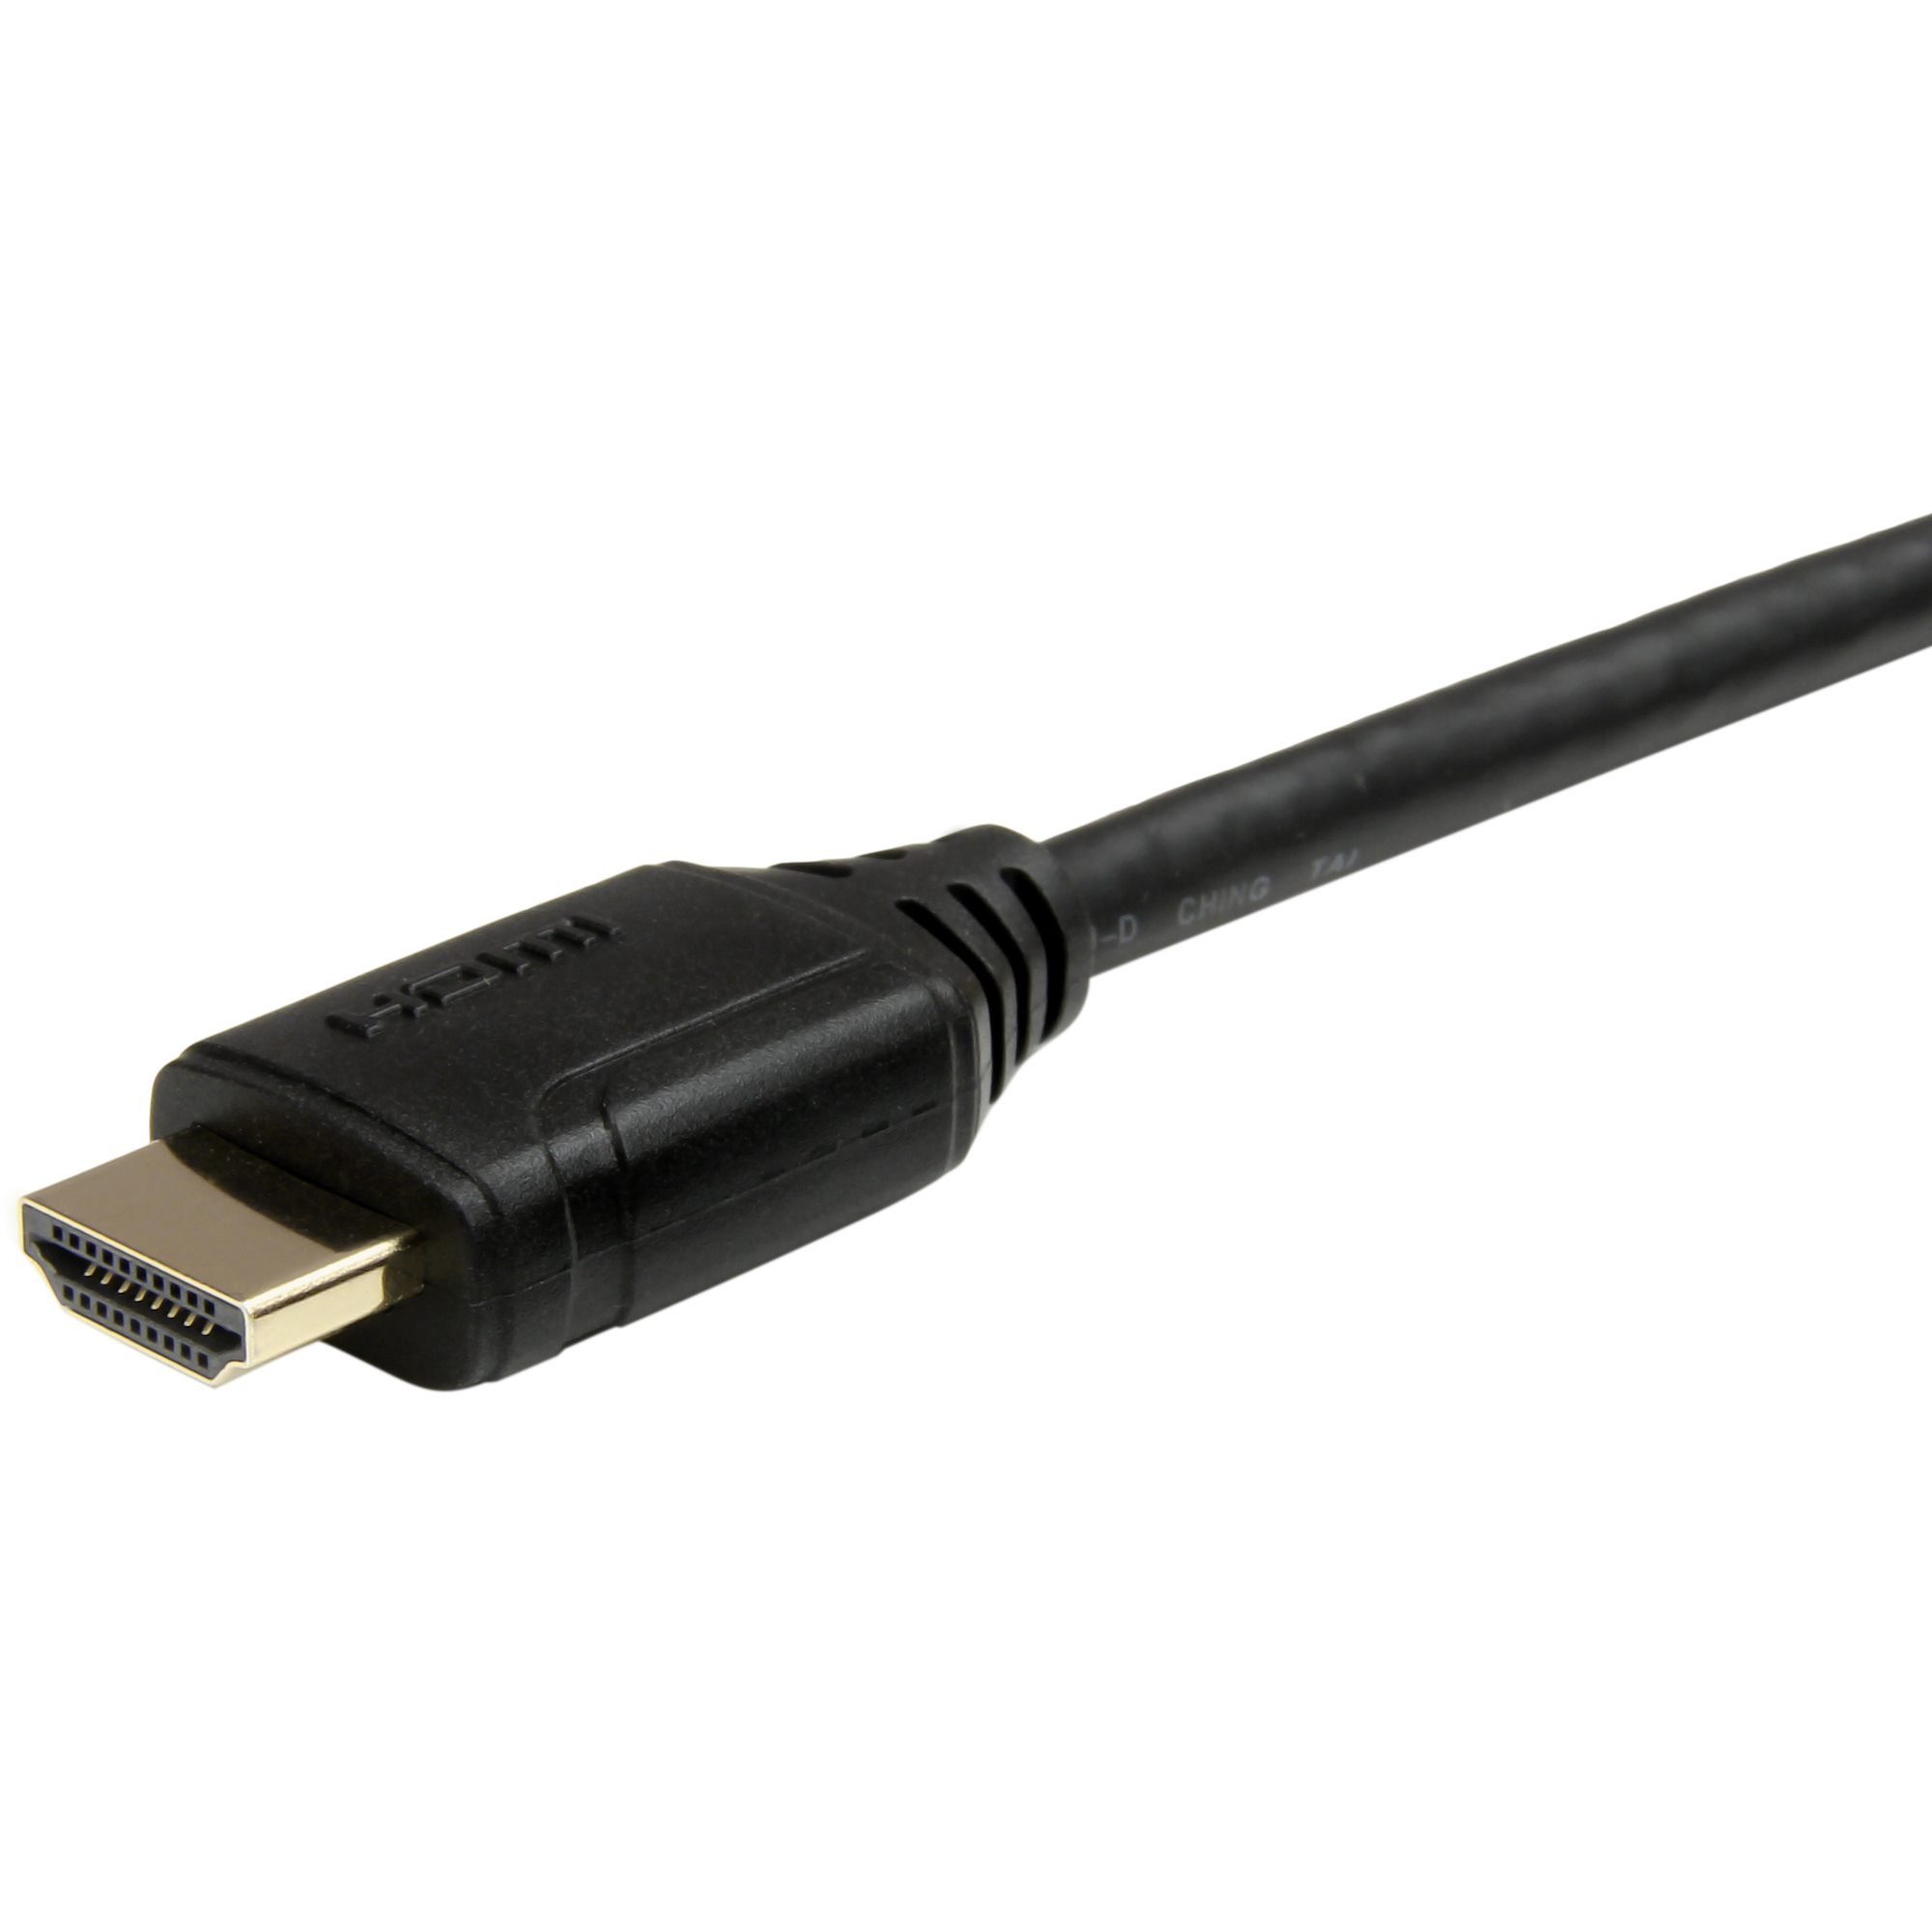 spil Forgænger radar 10ft 3m Premium HDMI 2.0 Cable 4K 60Hz - HDMI® Cables & HDMI Adapters |  StarTech.com